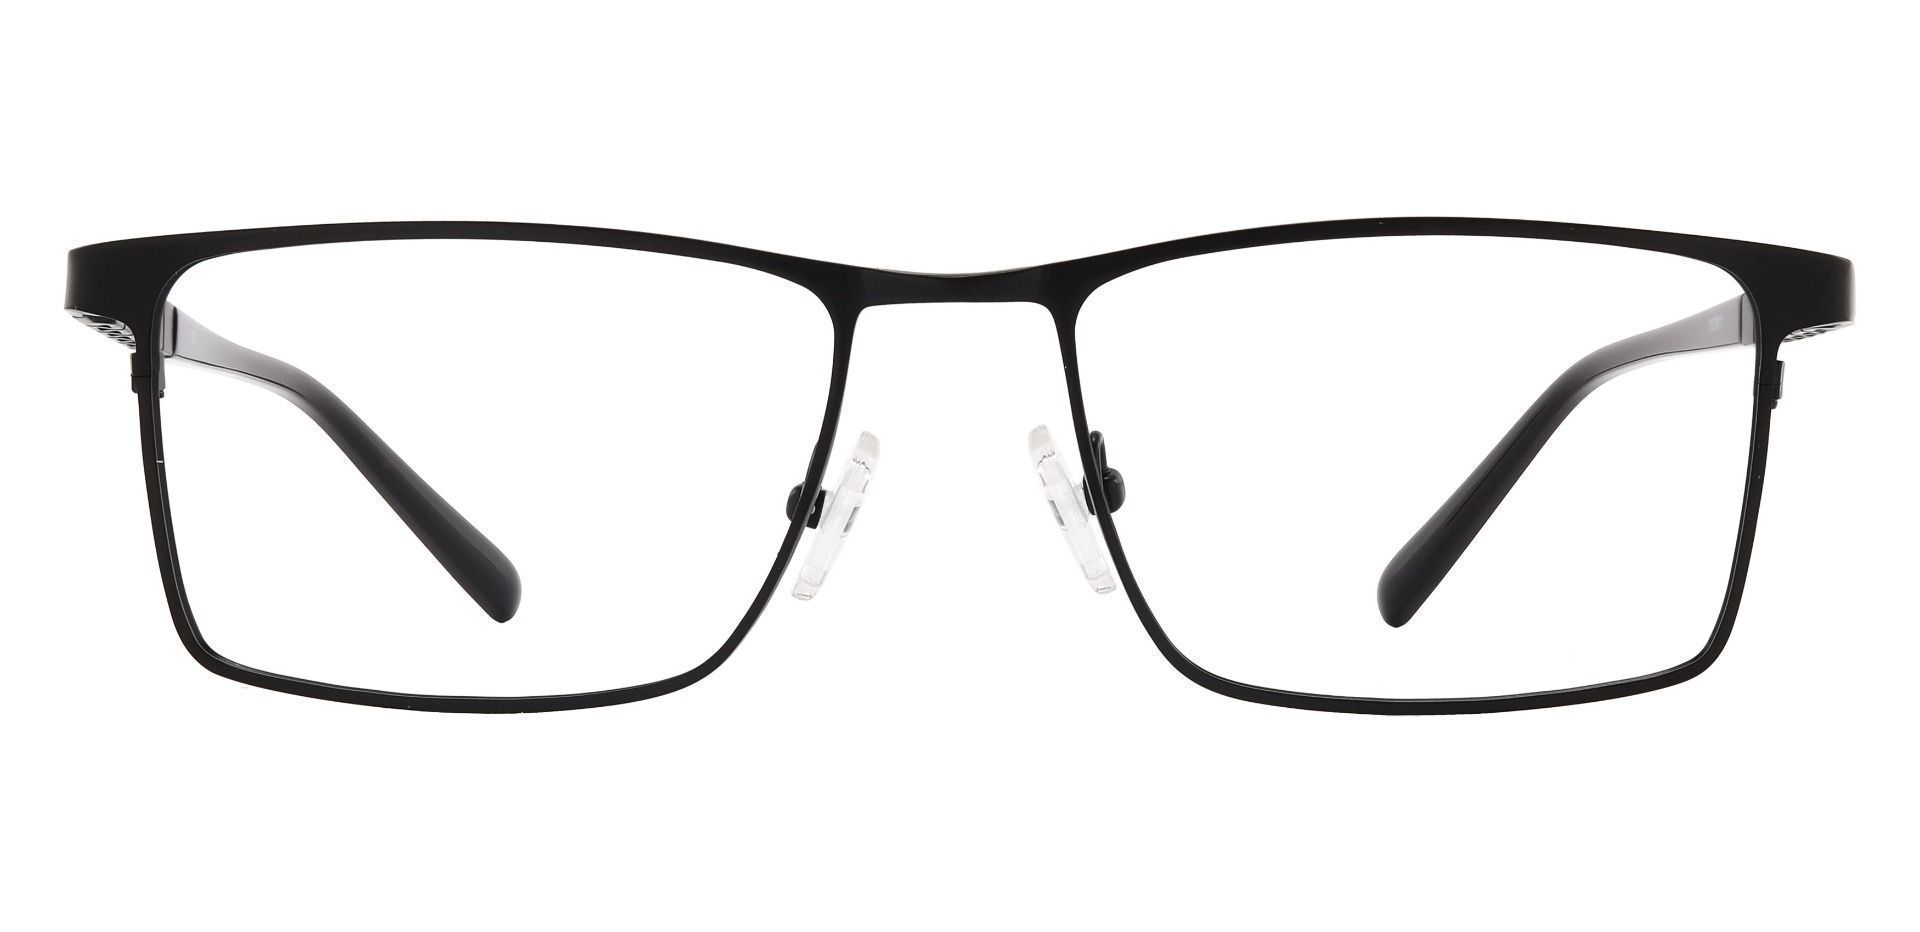 Cheshire Rectangle Eyeglasses Frame - Black